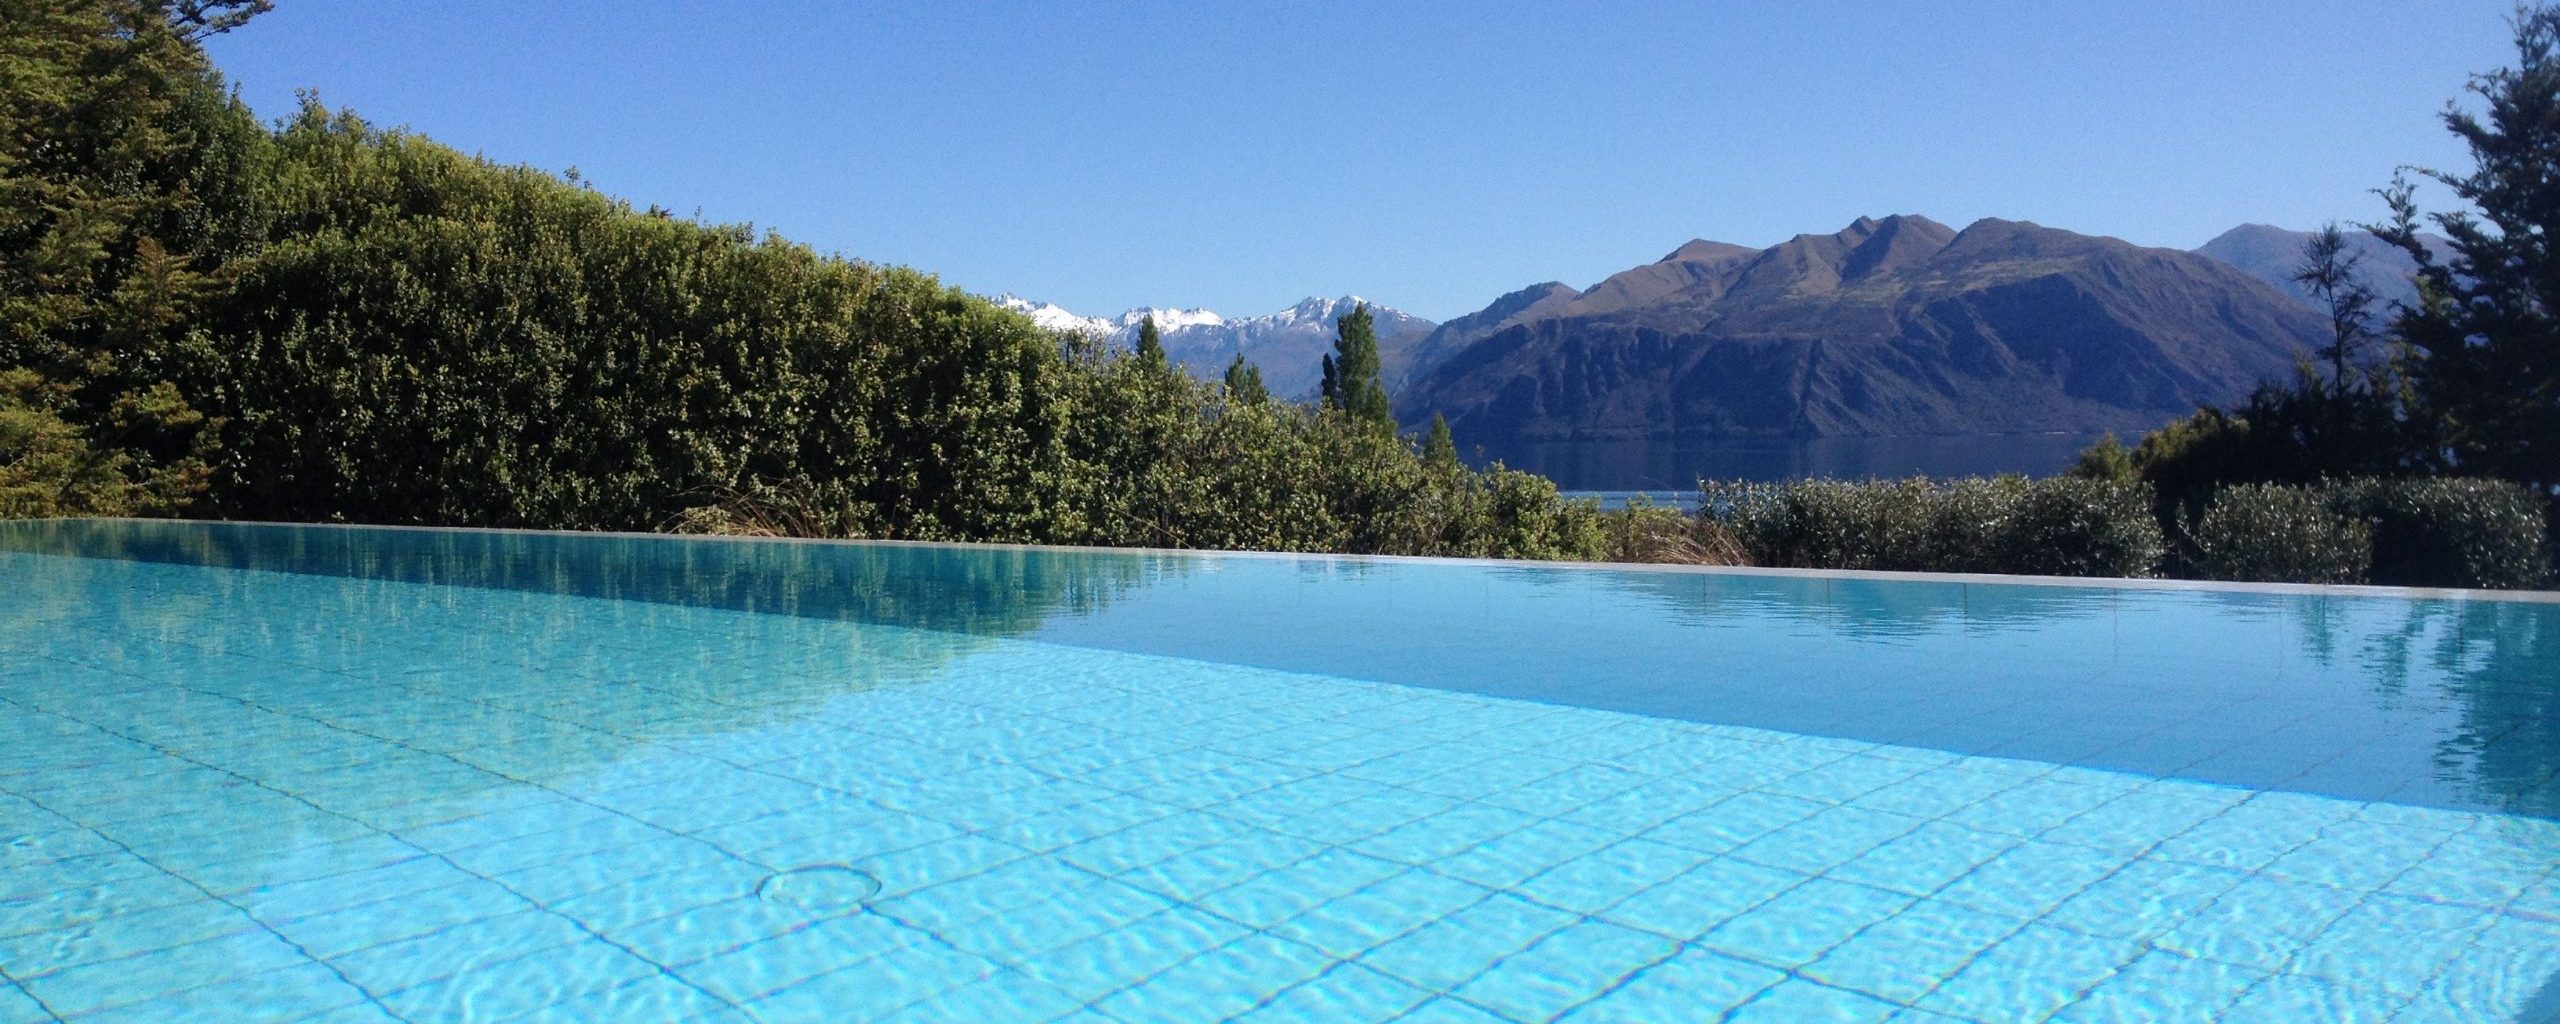 Aspiring Pools & Spas - Beautiful crystal blue infinity pool overlooking Lake Wanaka